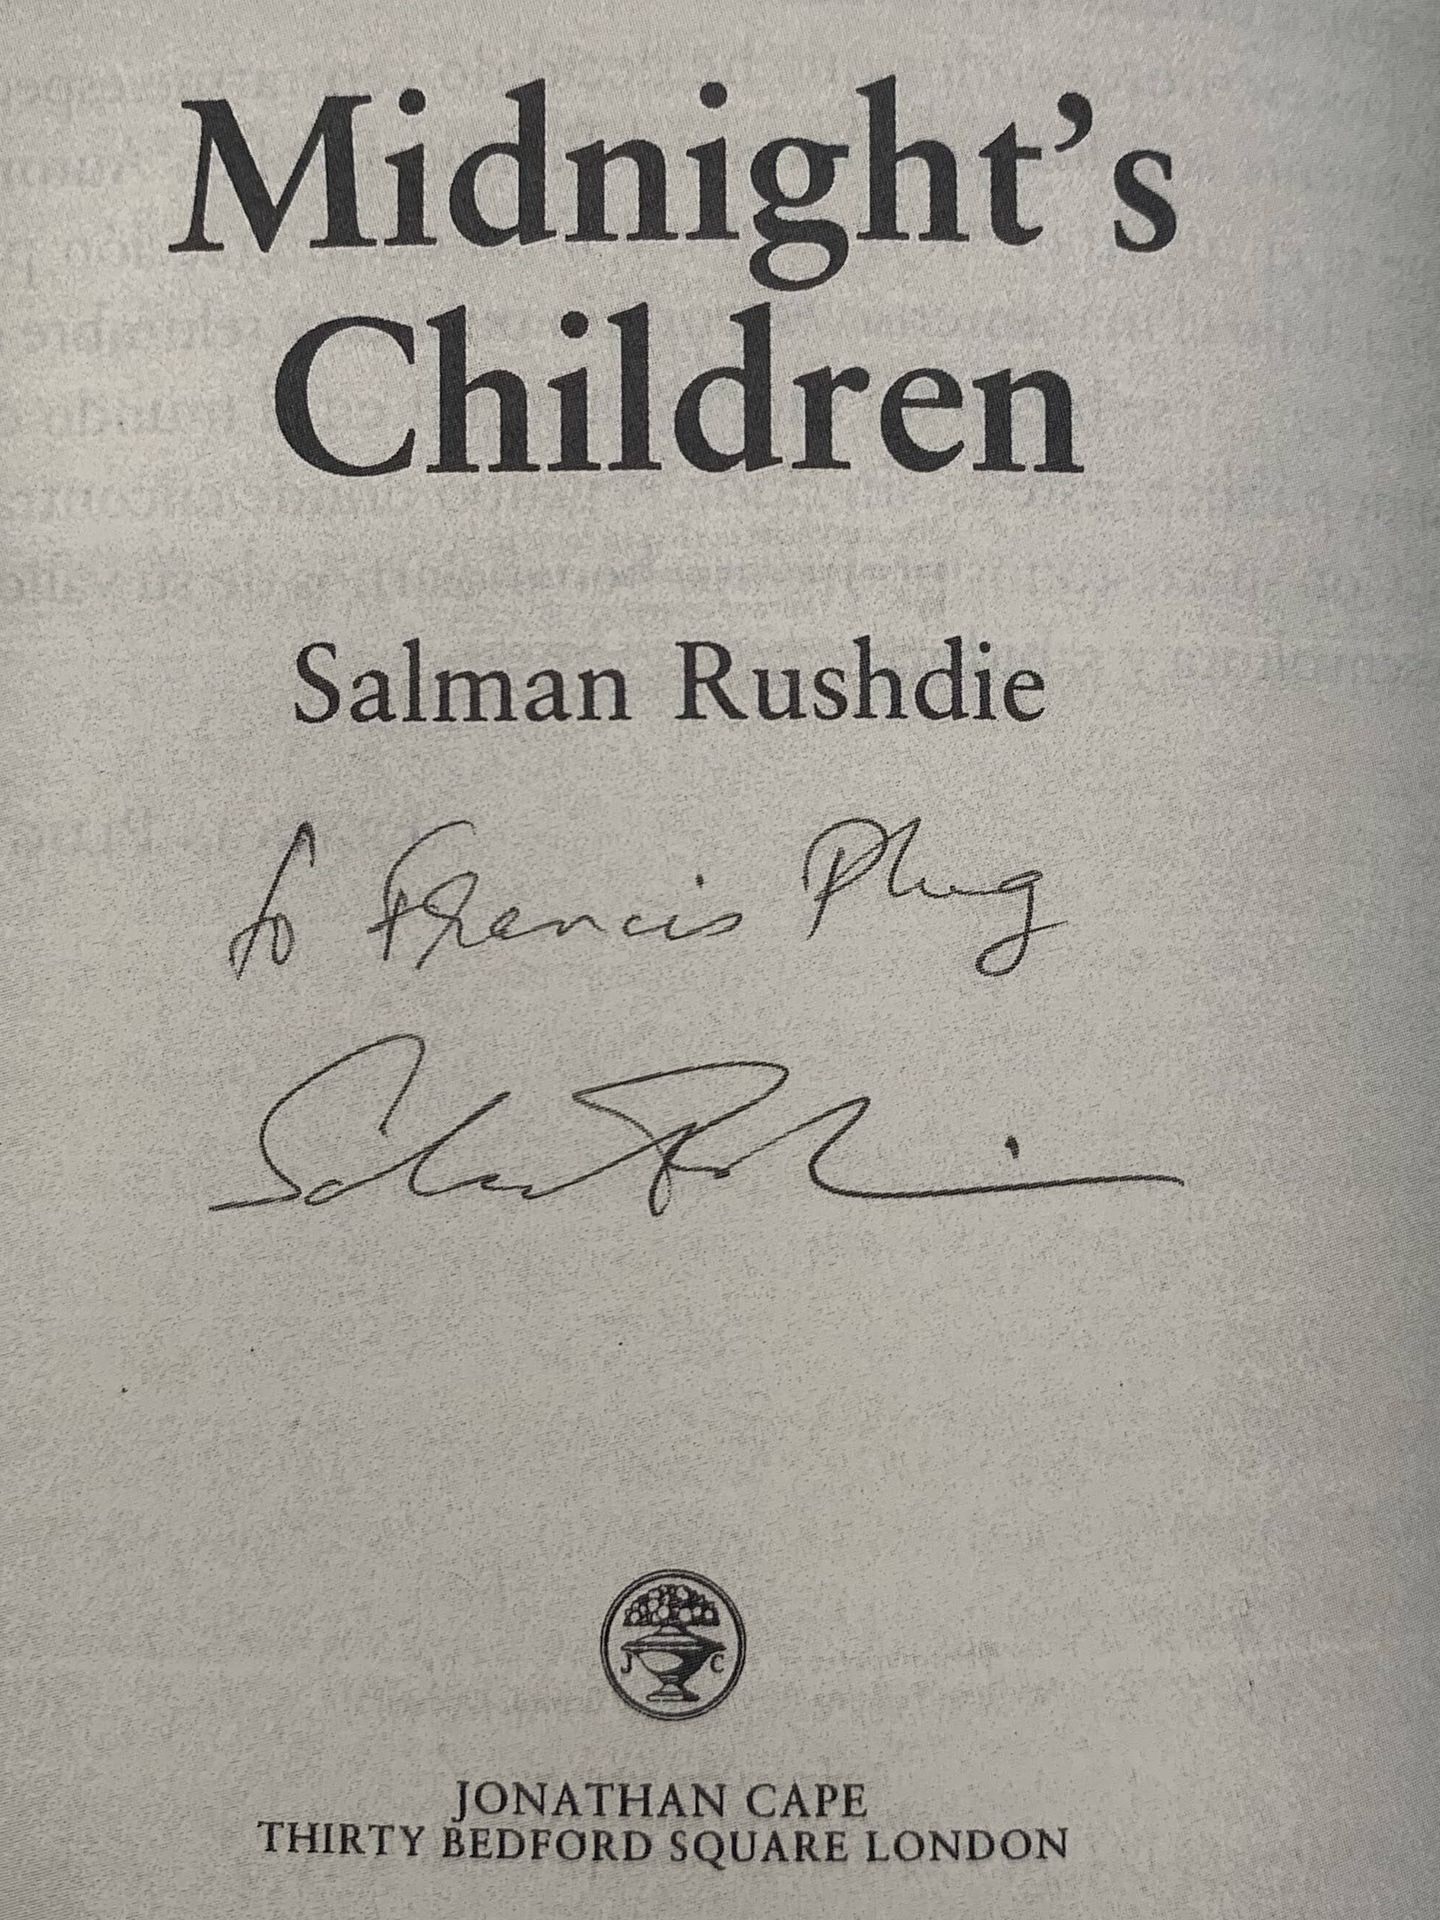 Autógrafo de Salman Rushdie a Francis Plug.  